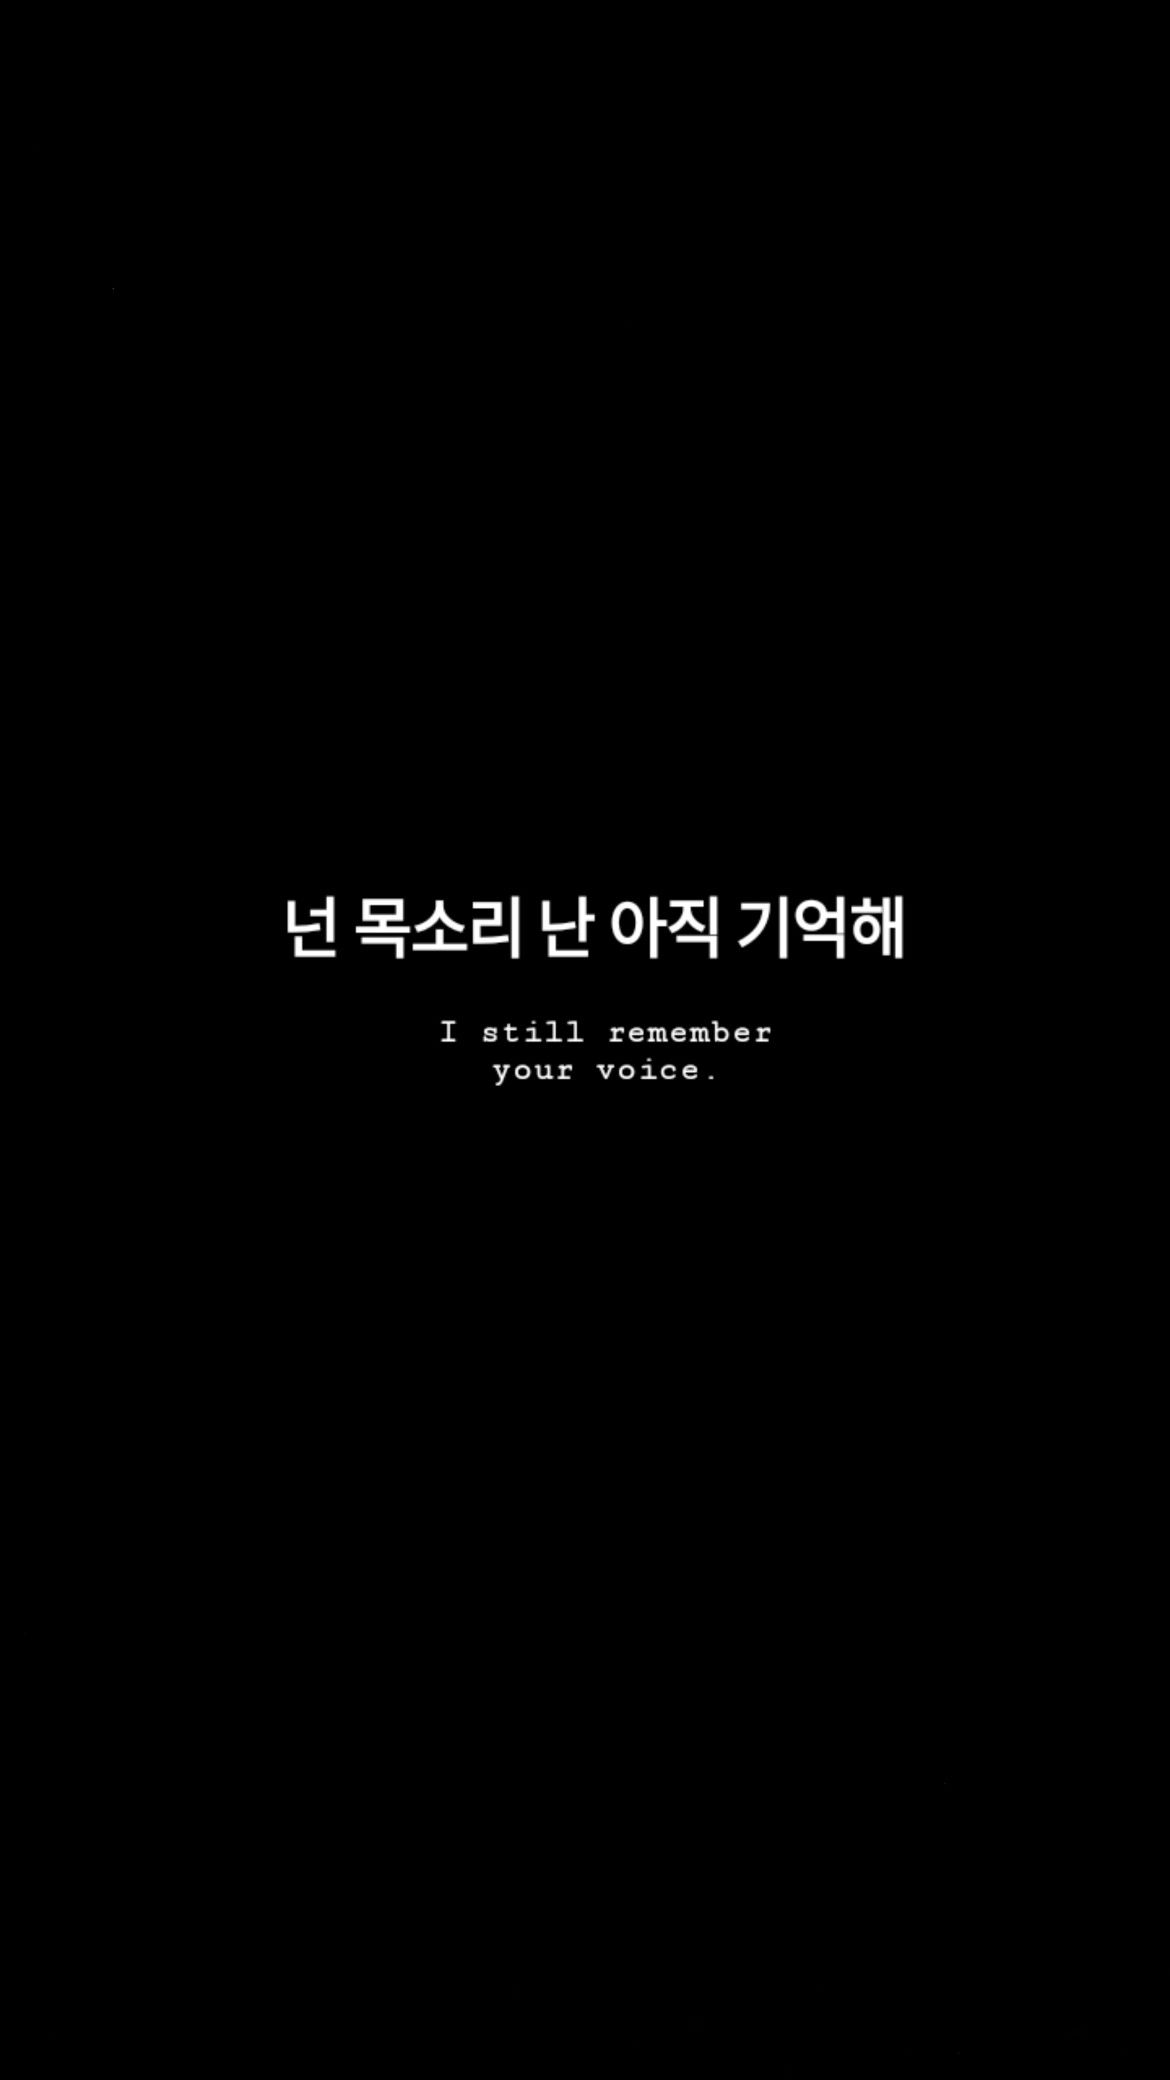 A black screen with white text in korean - Black, Korean, black quotes